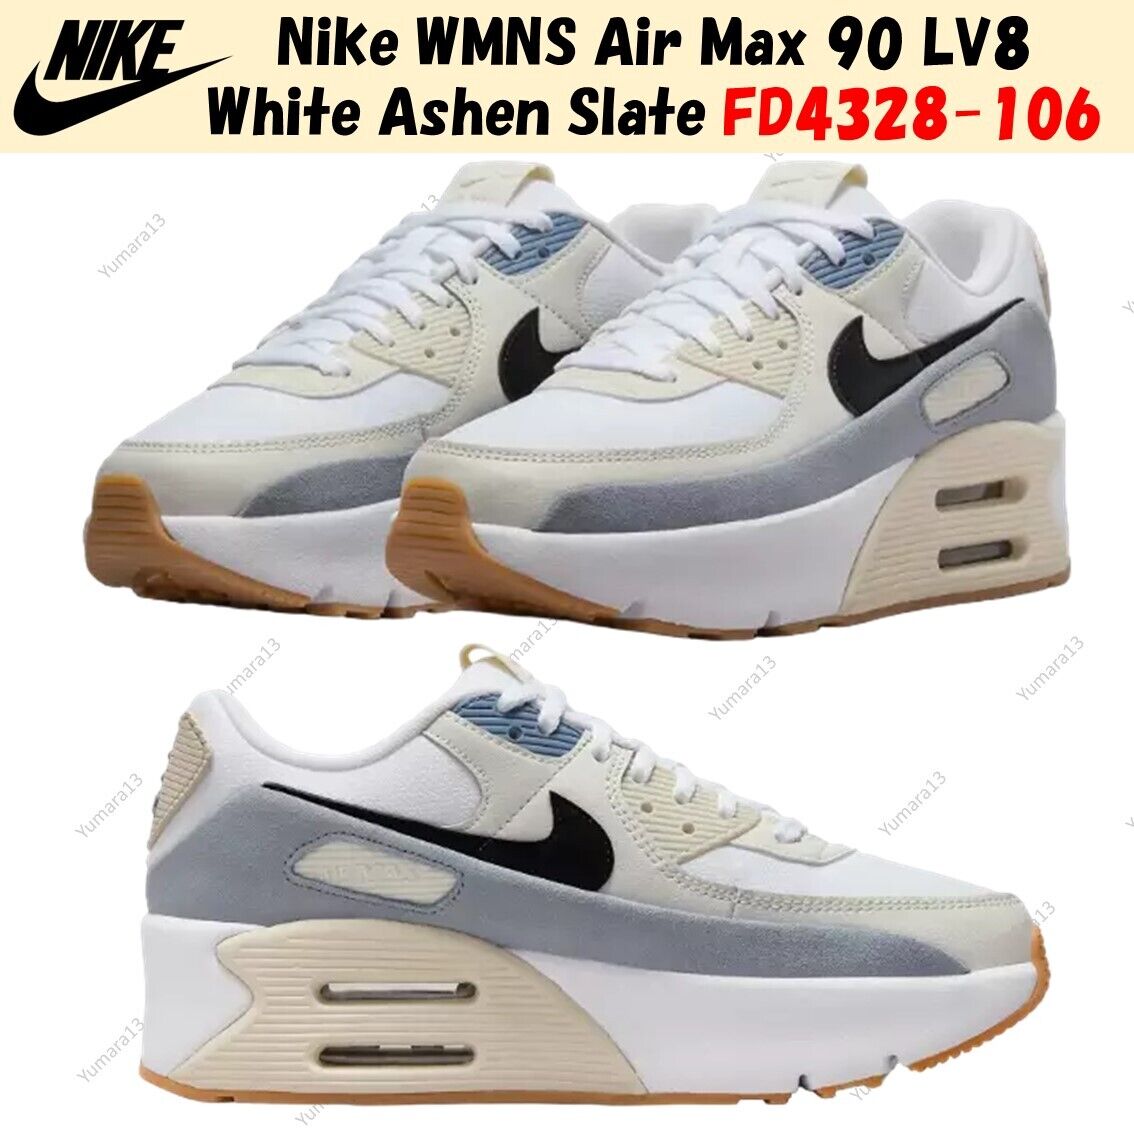 Interesting Nike WMNS Air Max 90 LV8 White Ashen Slate FD4328-106 US Women’s 5-15 on eBay